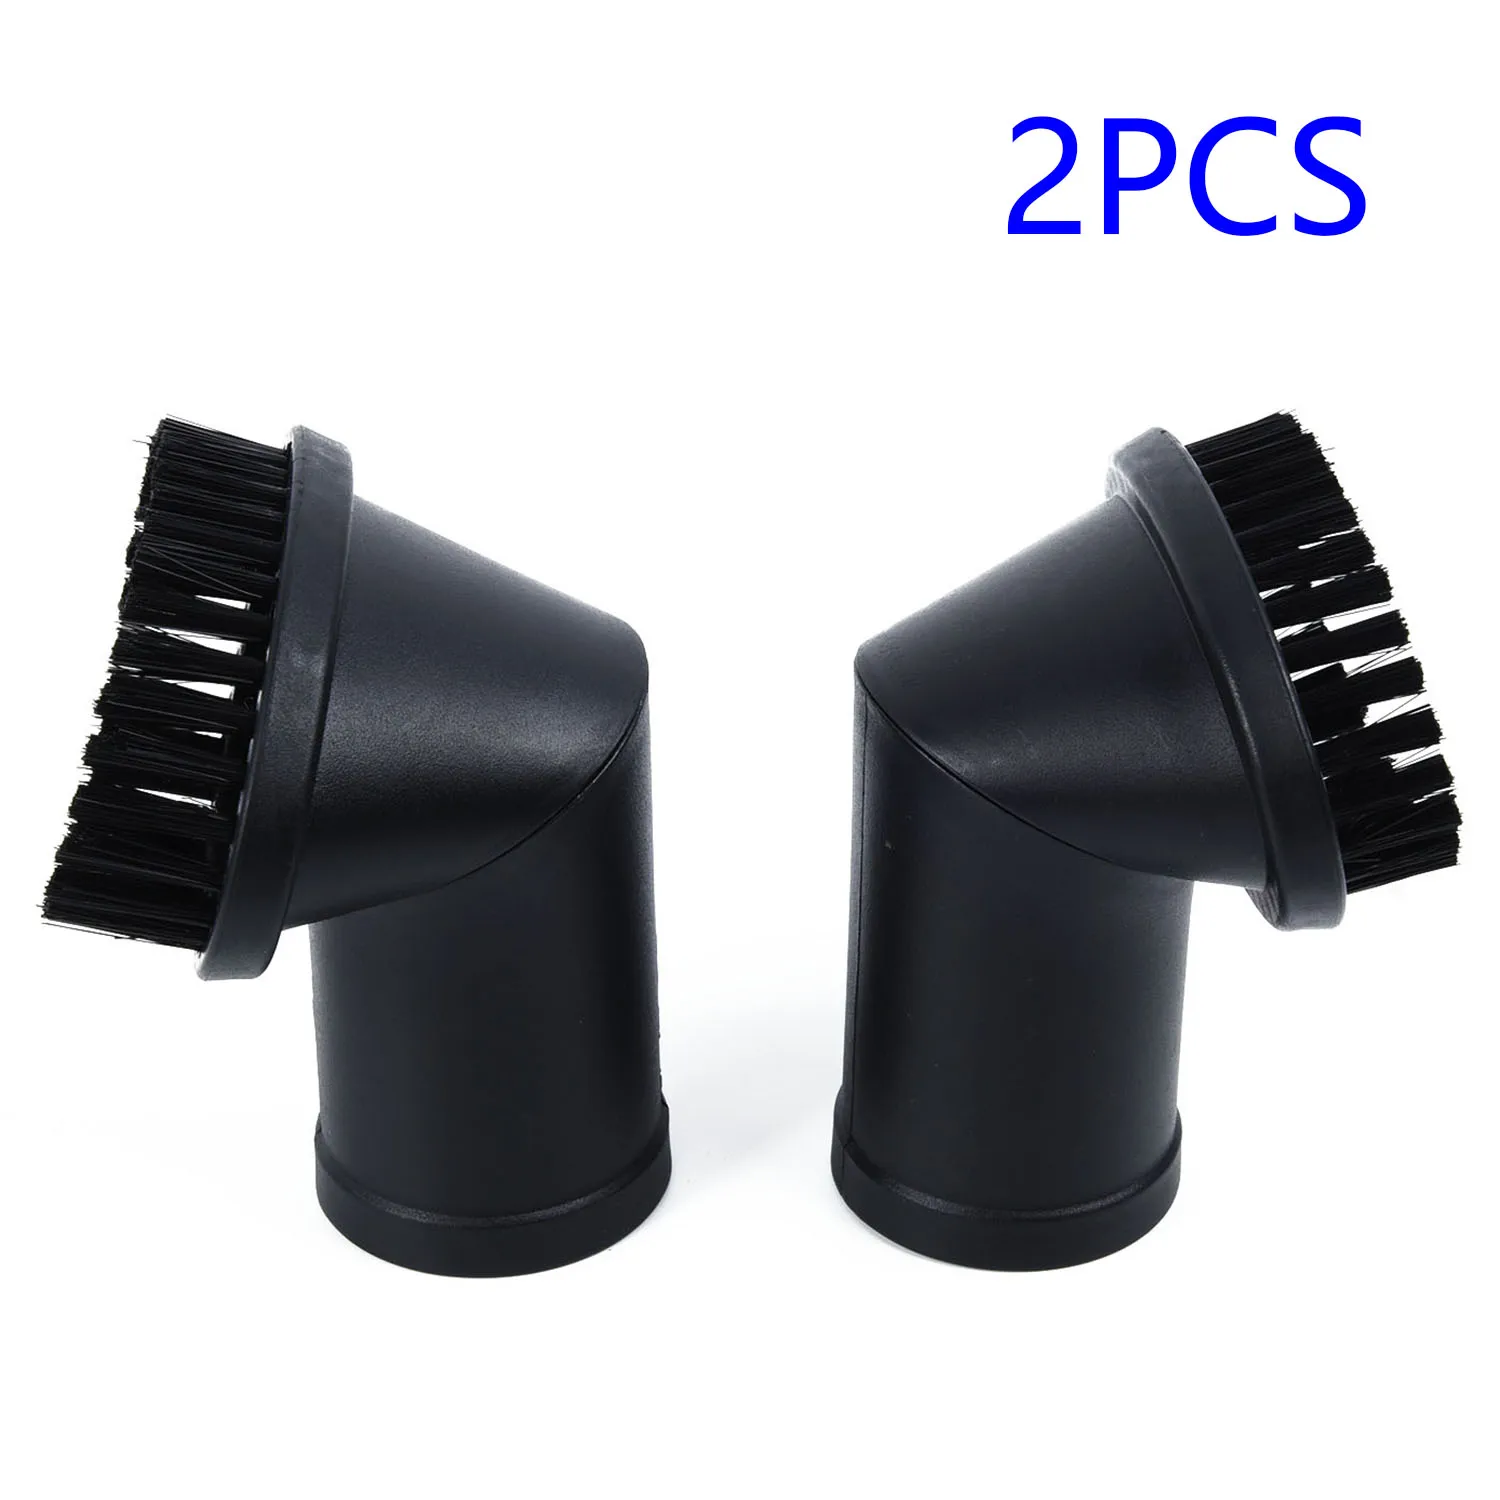 

2pcs 35mm Round Dust Brush Bristle Brush Head Replacement Parts Black Vacuum Cleaner Cleaning Brush Attachment